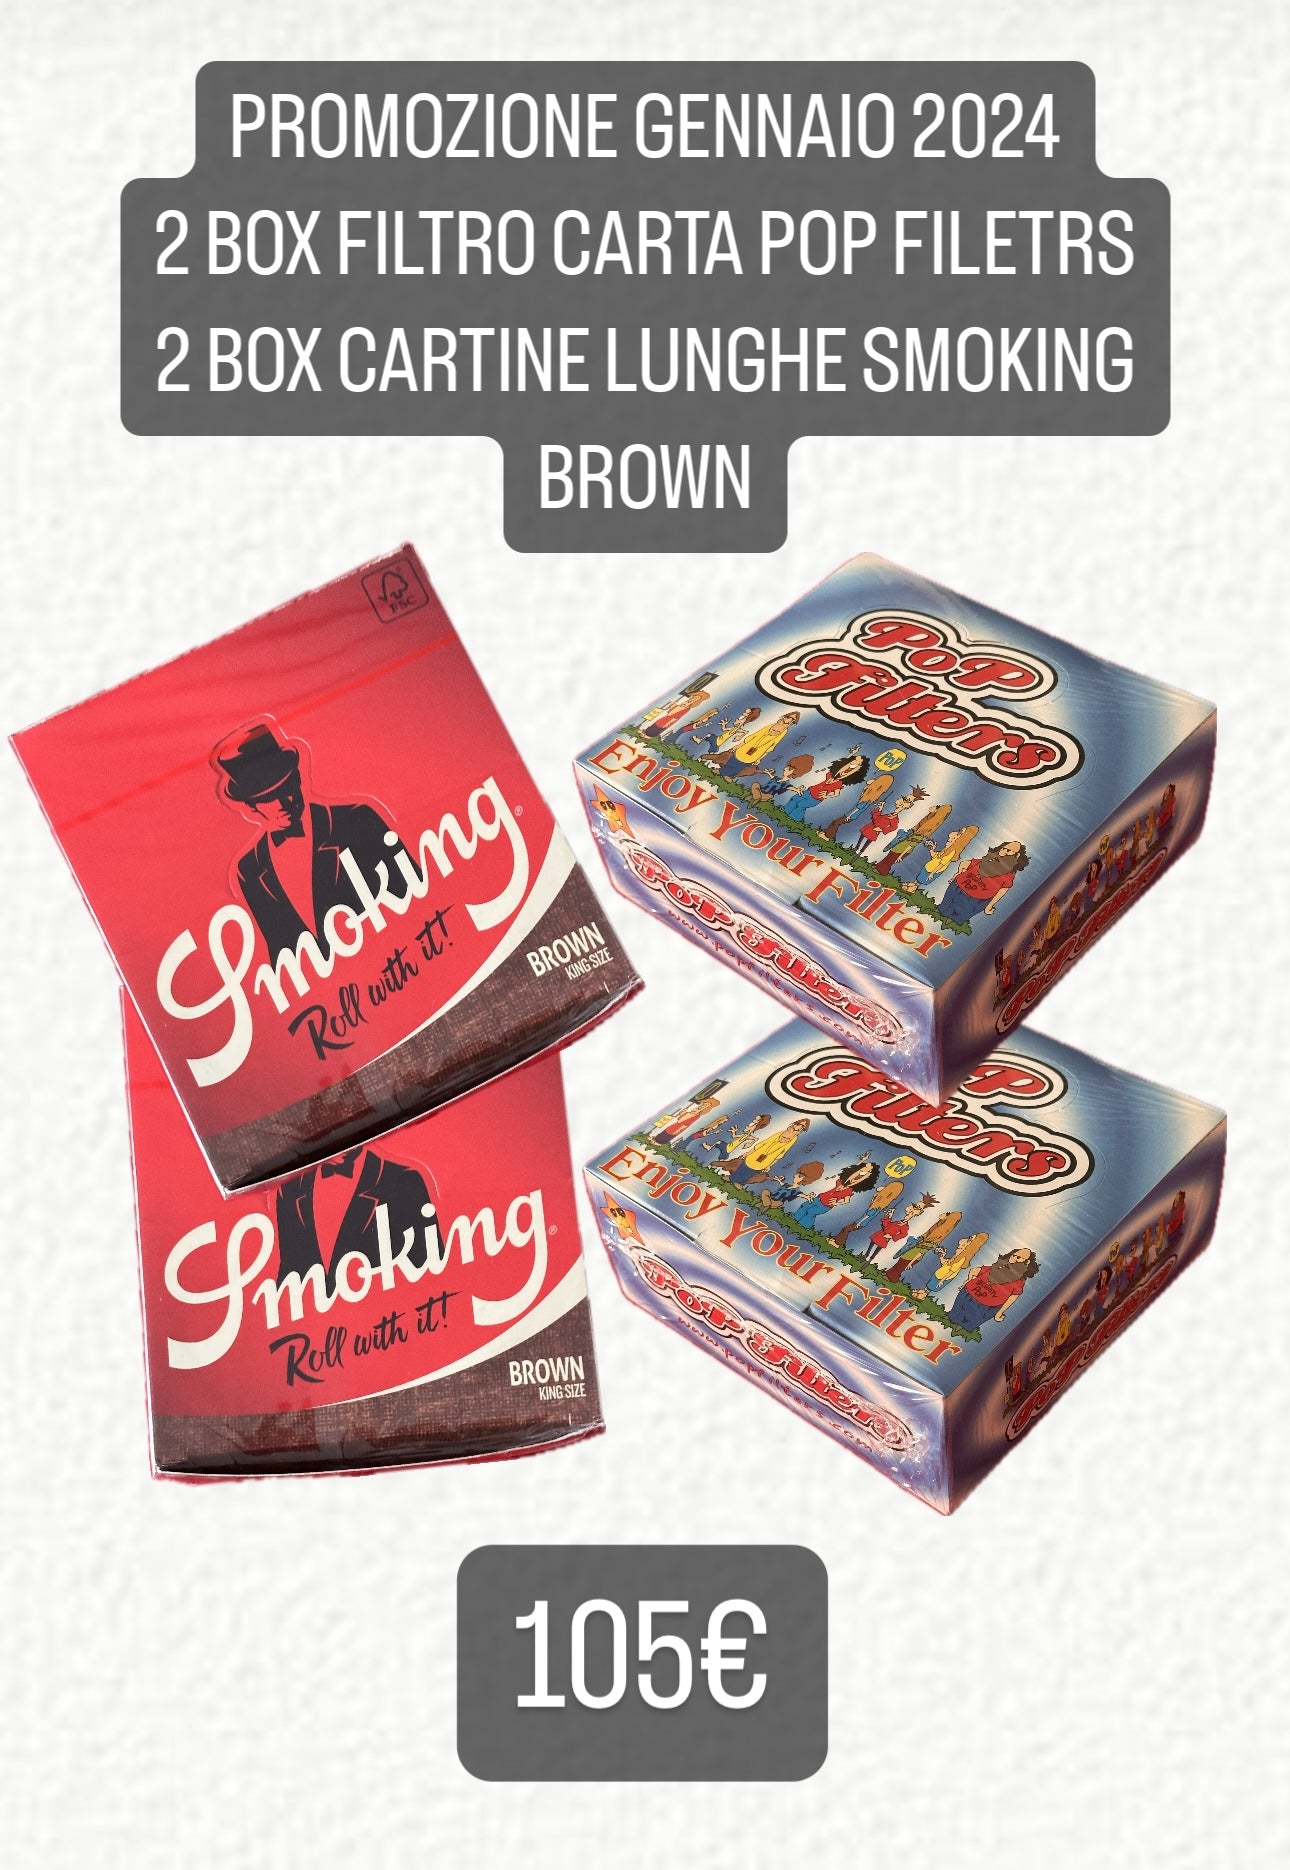 Cartine Lunghe Smoking Brown + Pop Filters Filtro Carta